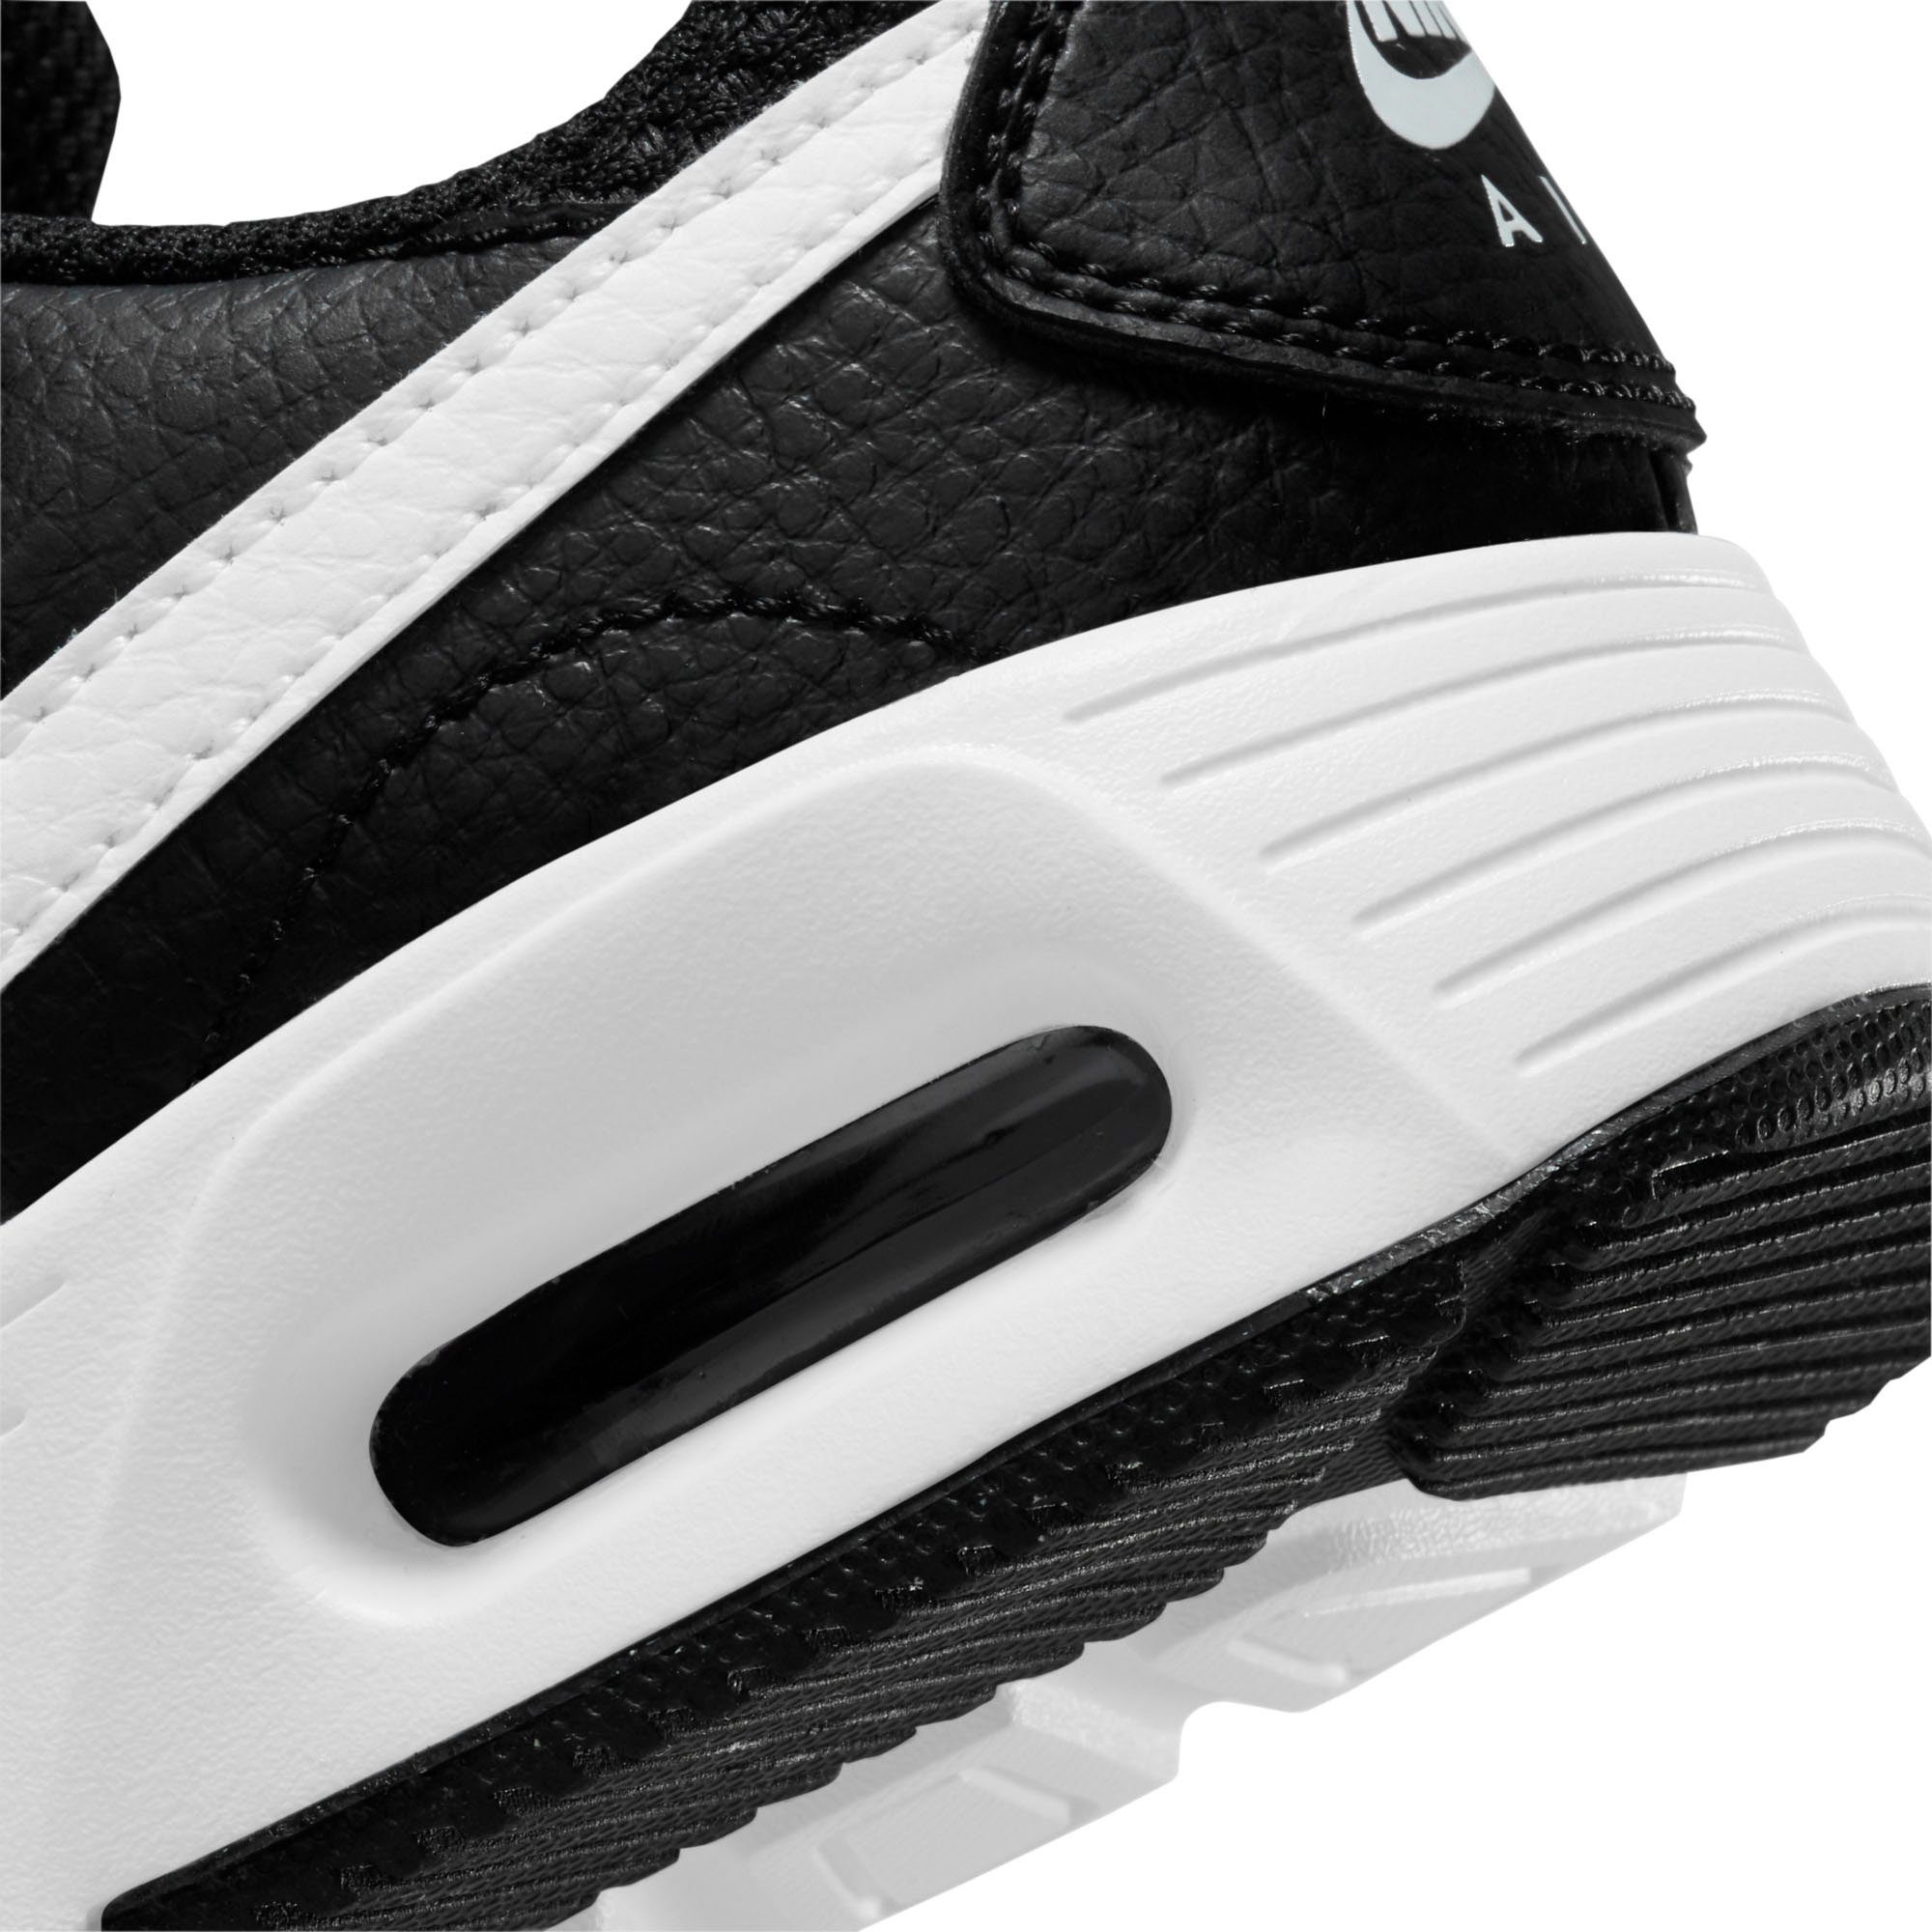 Nike Sportswear AIR MAX schwarz-weiß SC (PS) Sneaker